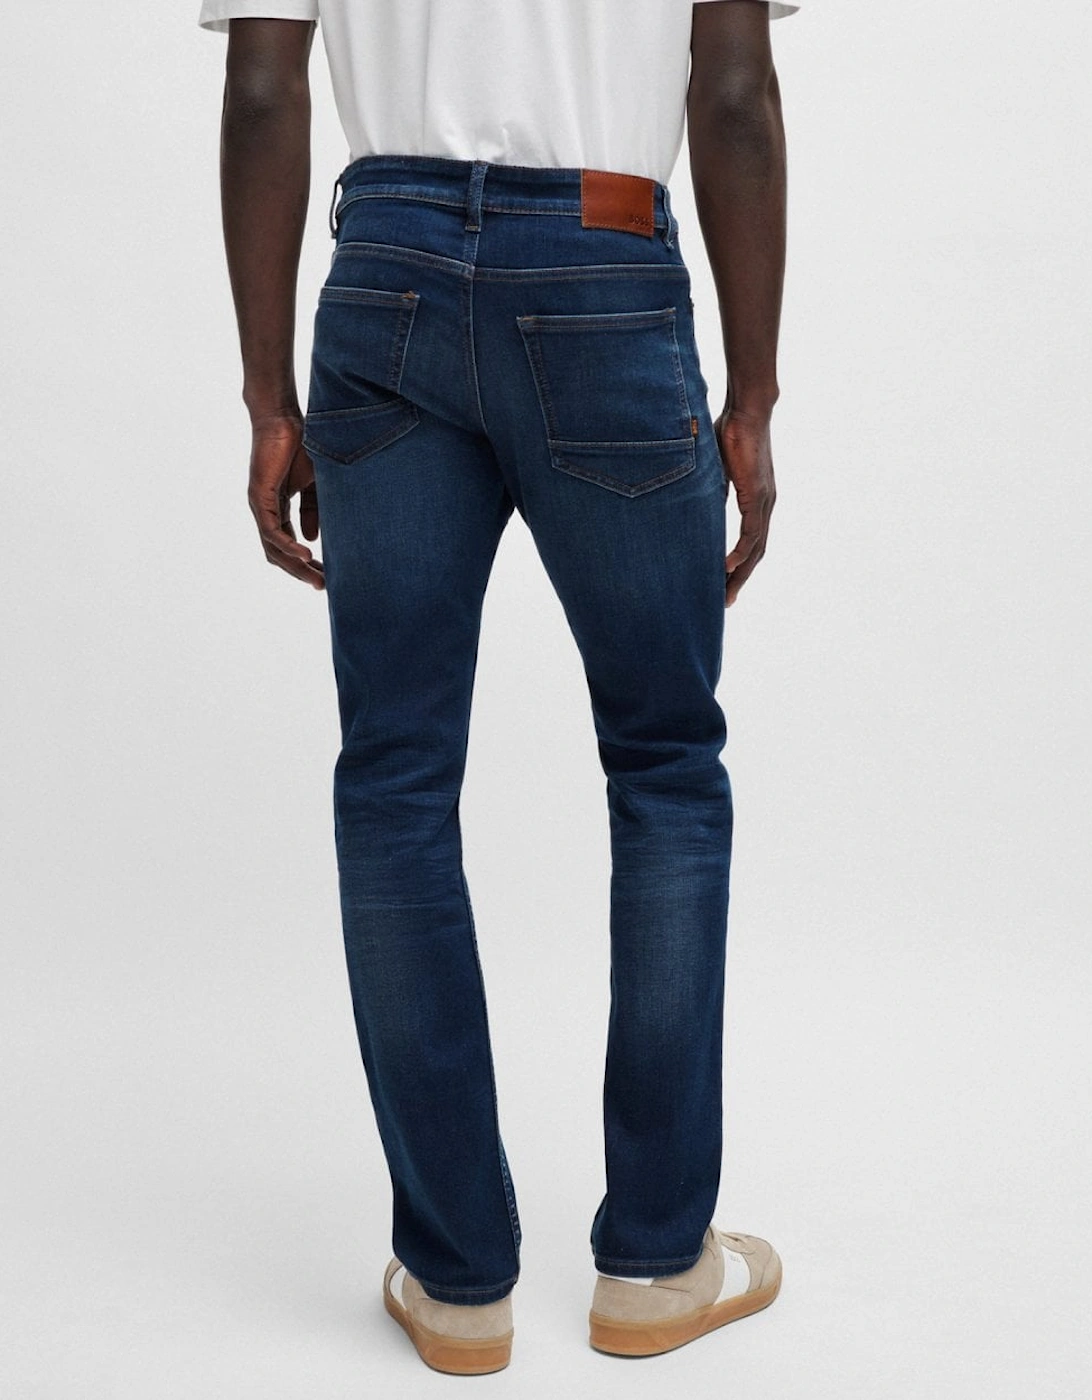 Orange Delaware BC-C Mens Slim Fit Jeans in Dark Blue Super-Stretch Denim